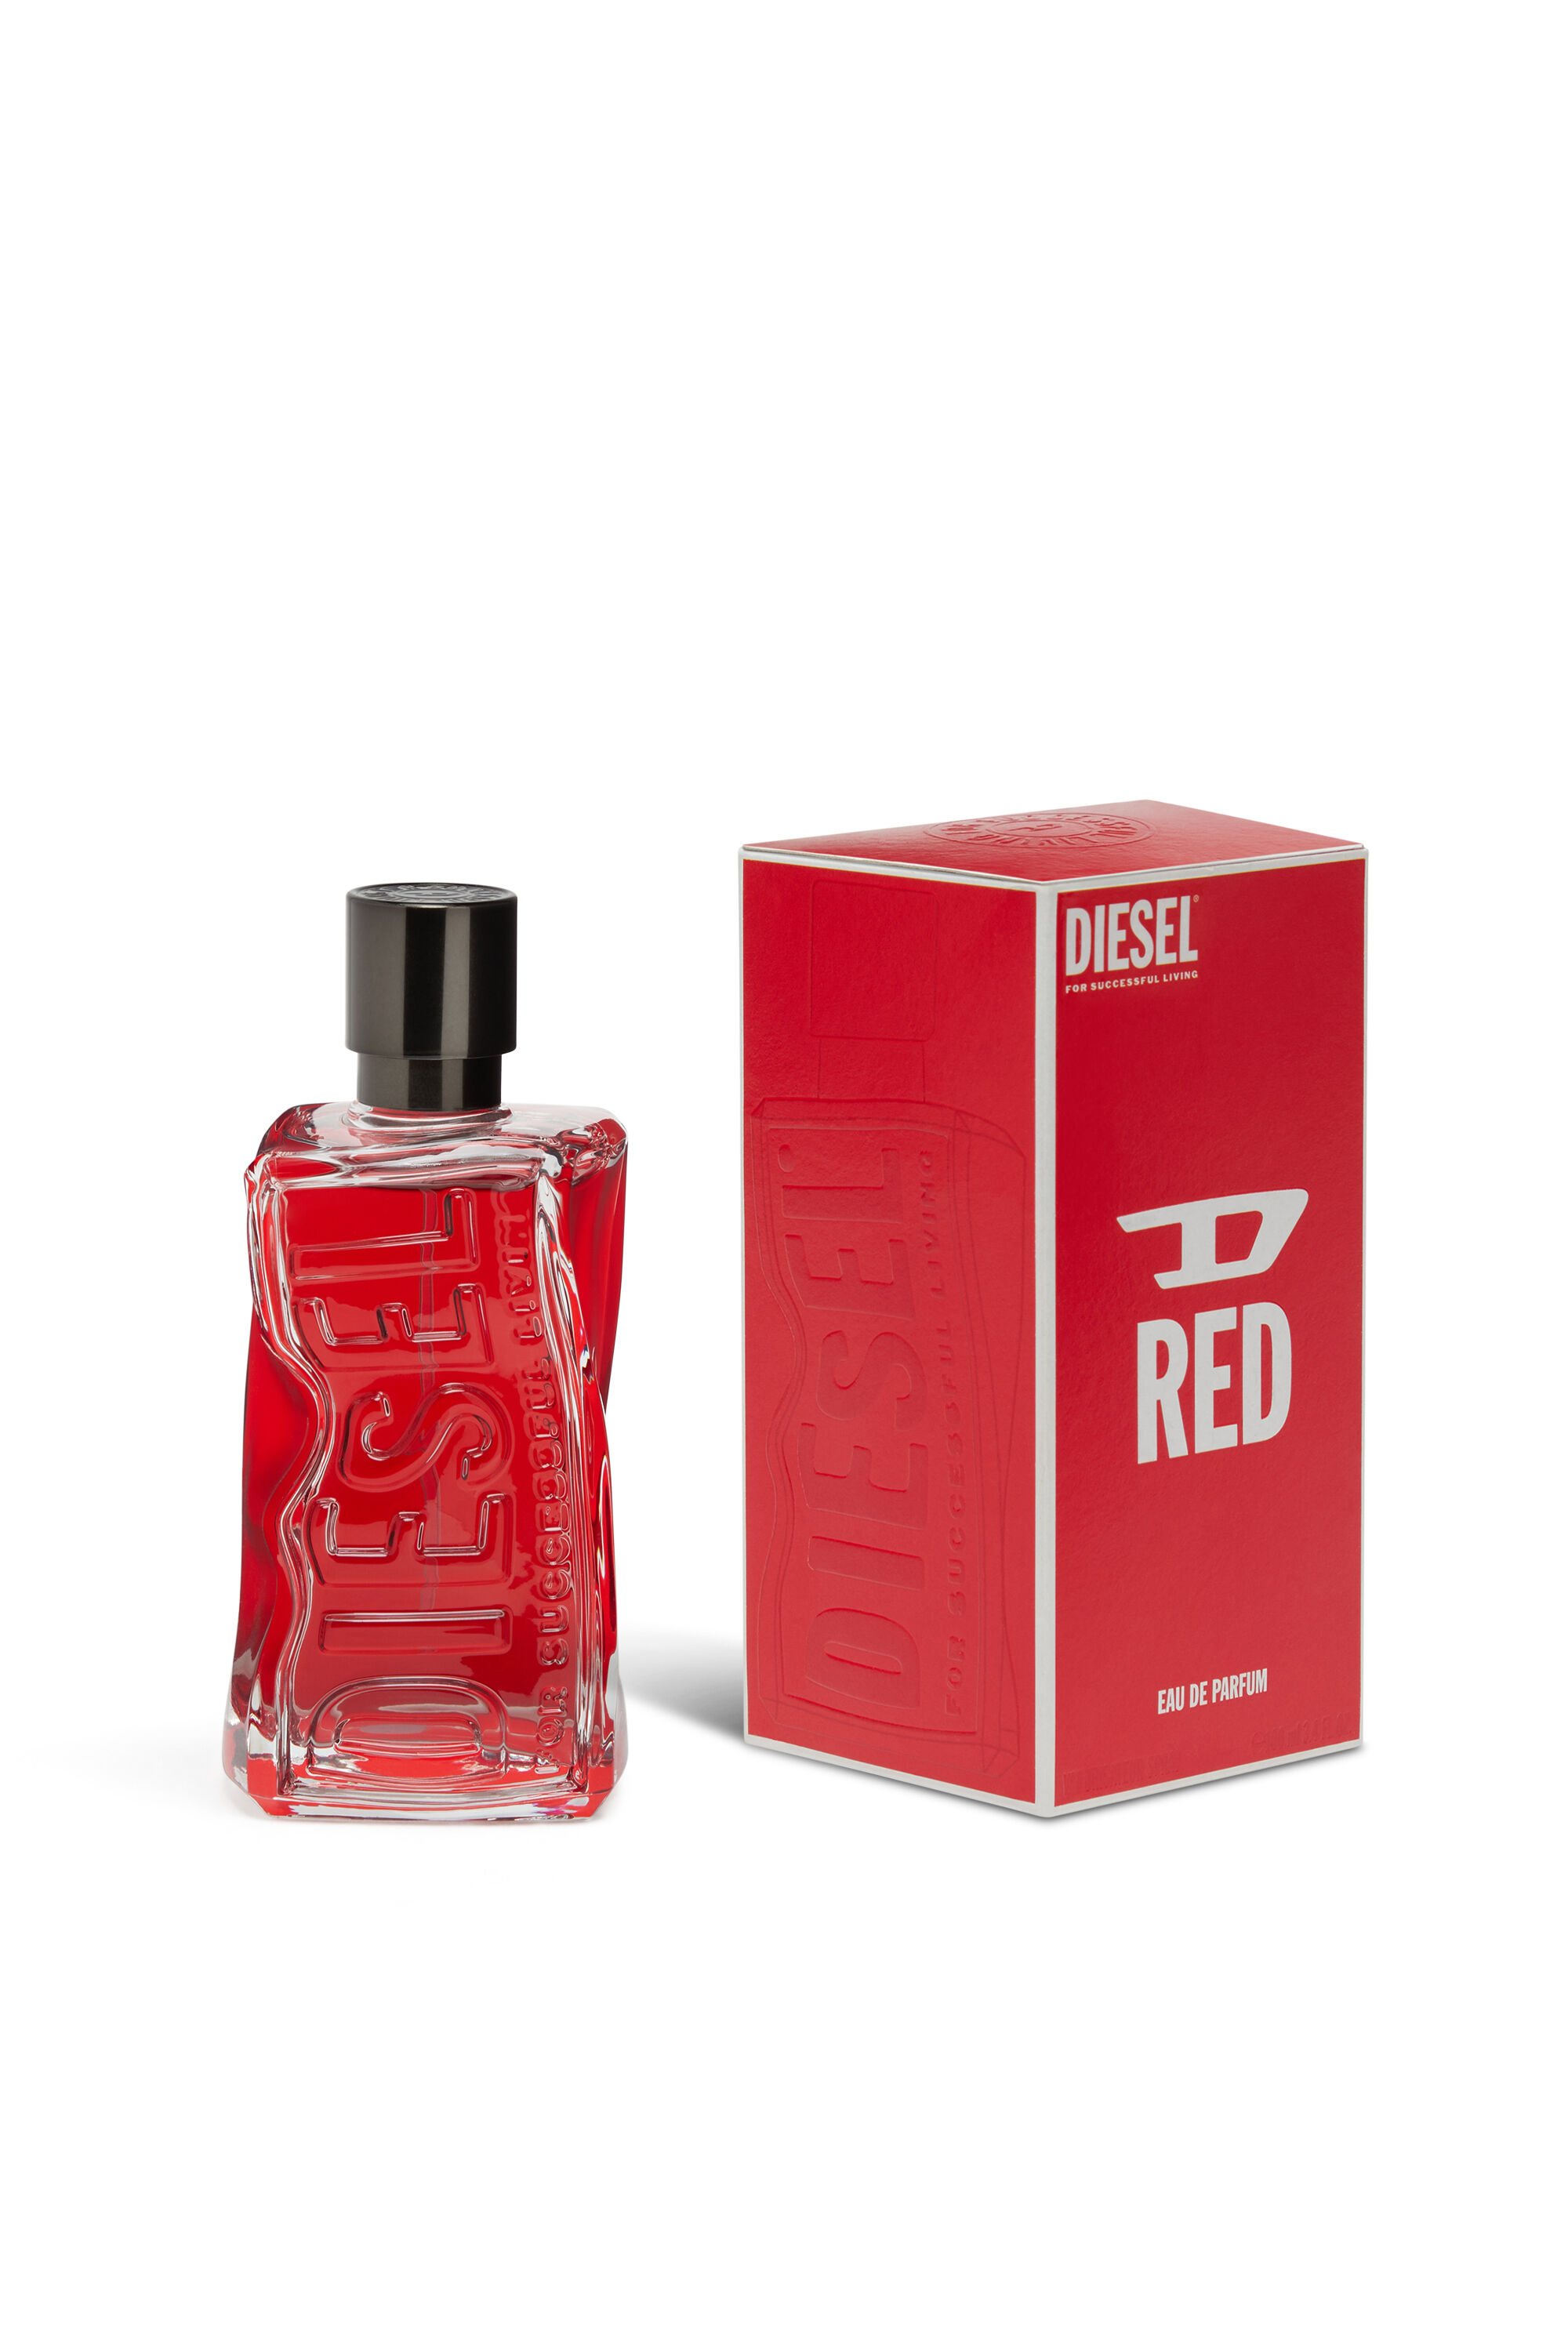 Diesel - D RED 50 ML, Male D RED 50ml, 1.7 FL.OZ., Eau de Parfum in Red - Image 2